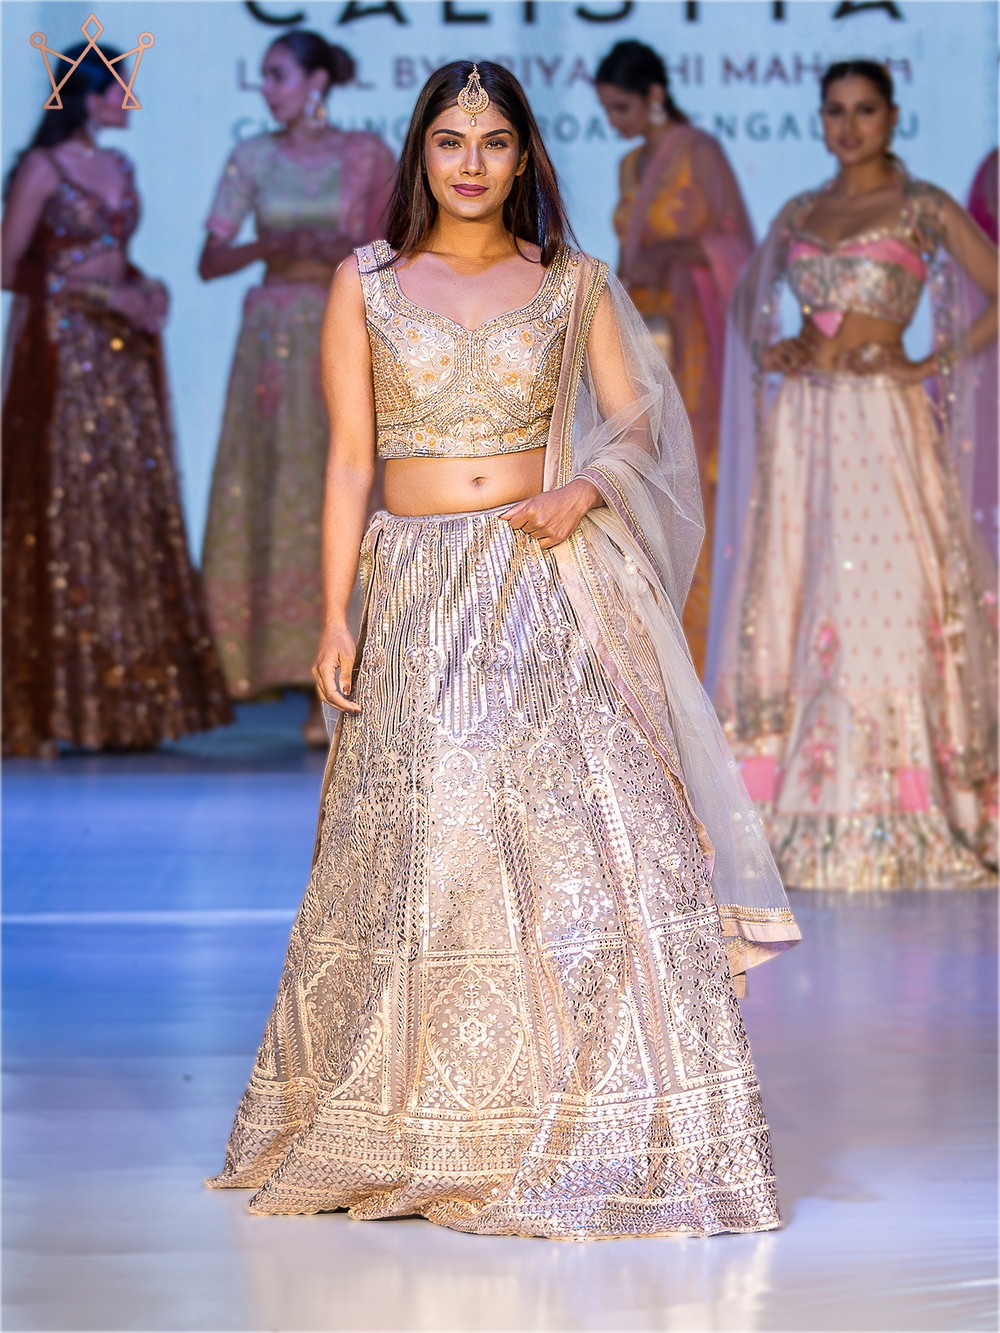 Photo From Fashion Shows - By Calistta Label By Priyanshi Mahesh